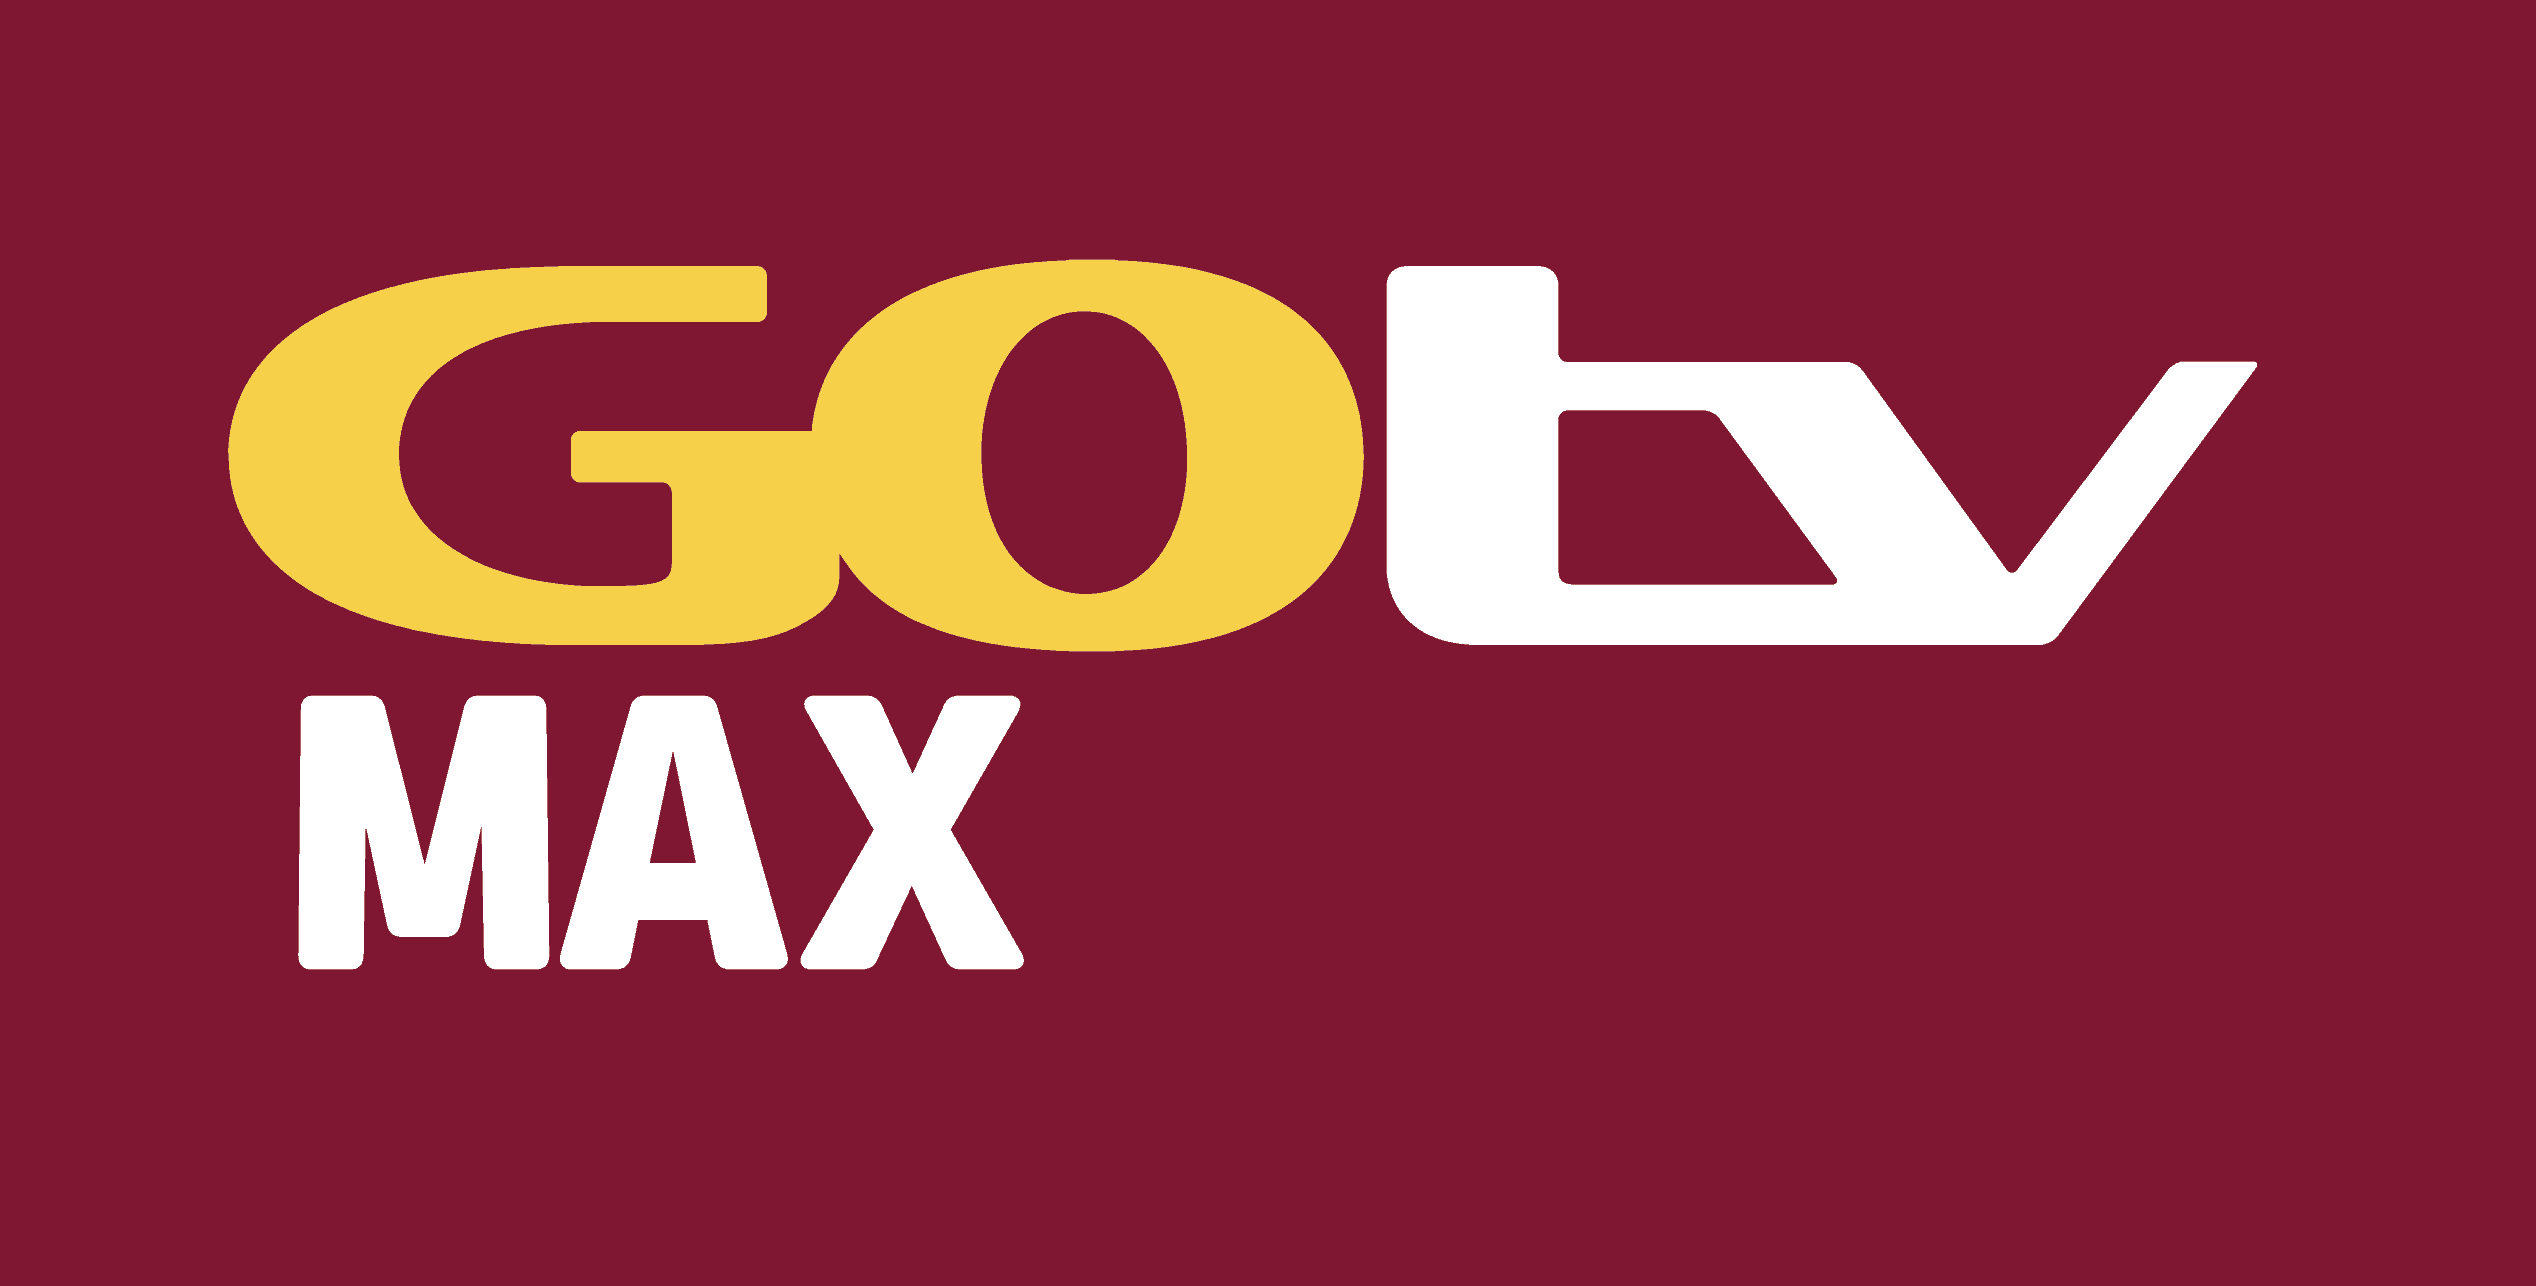 GOTv Max Channels